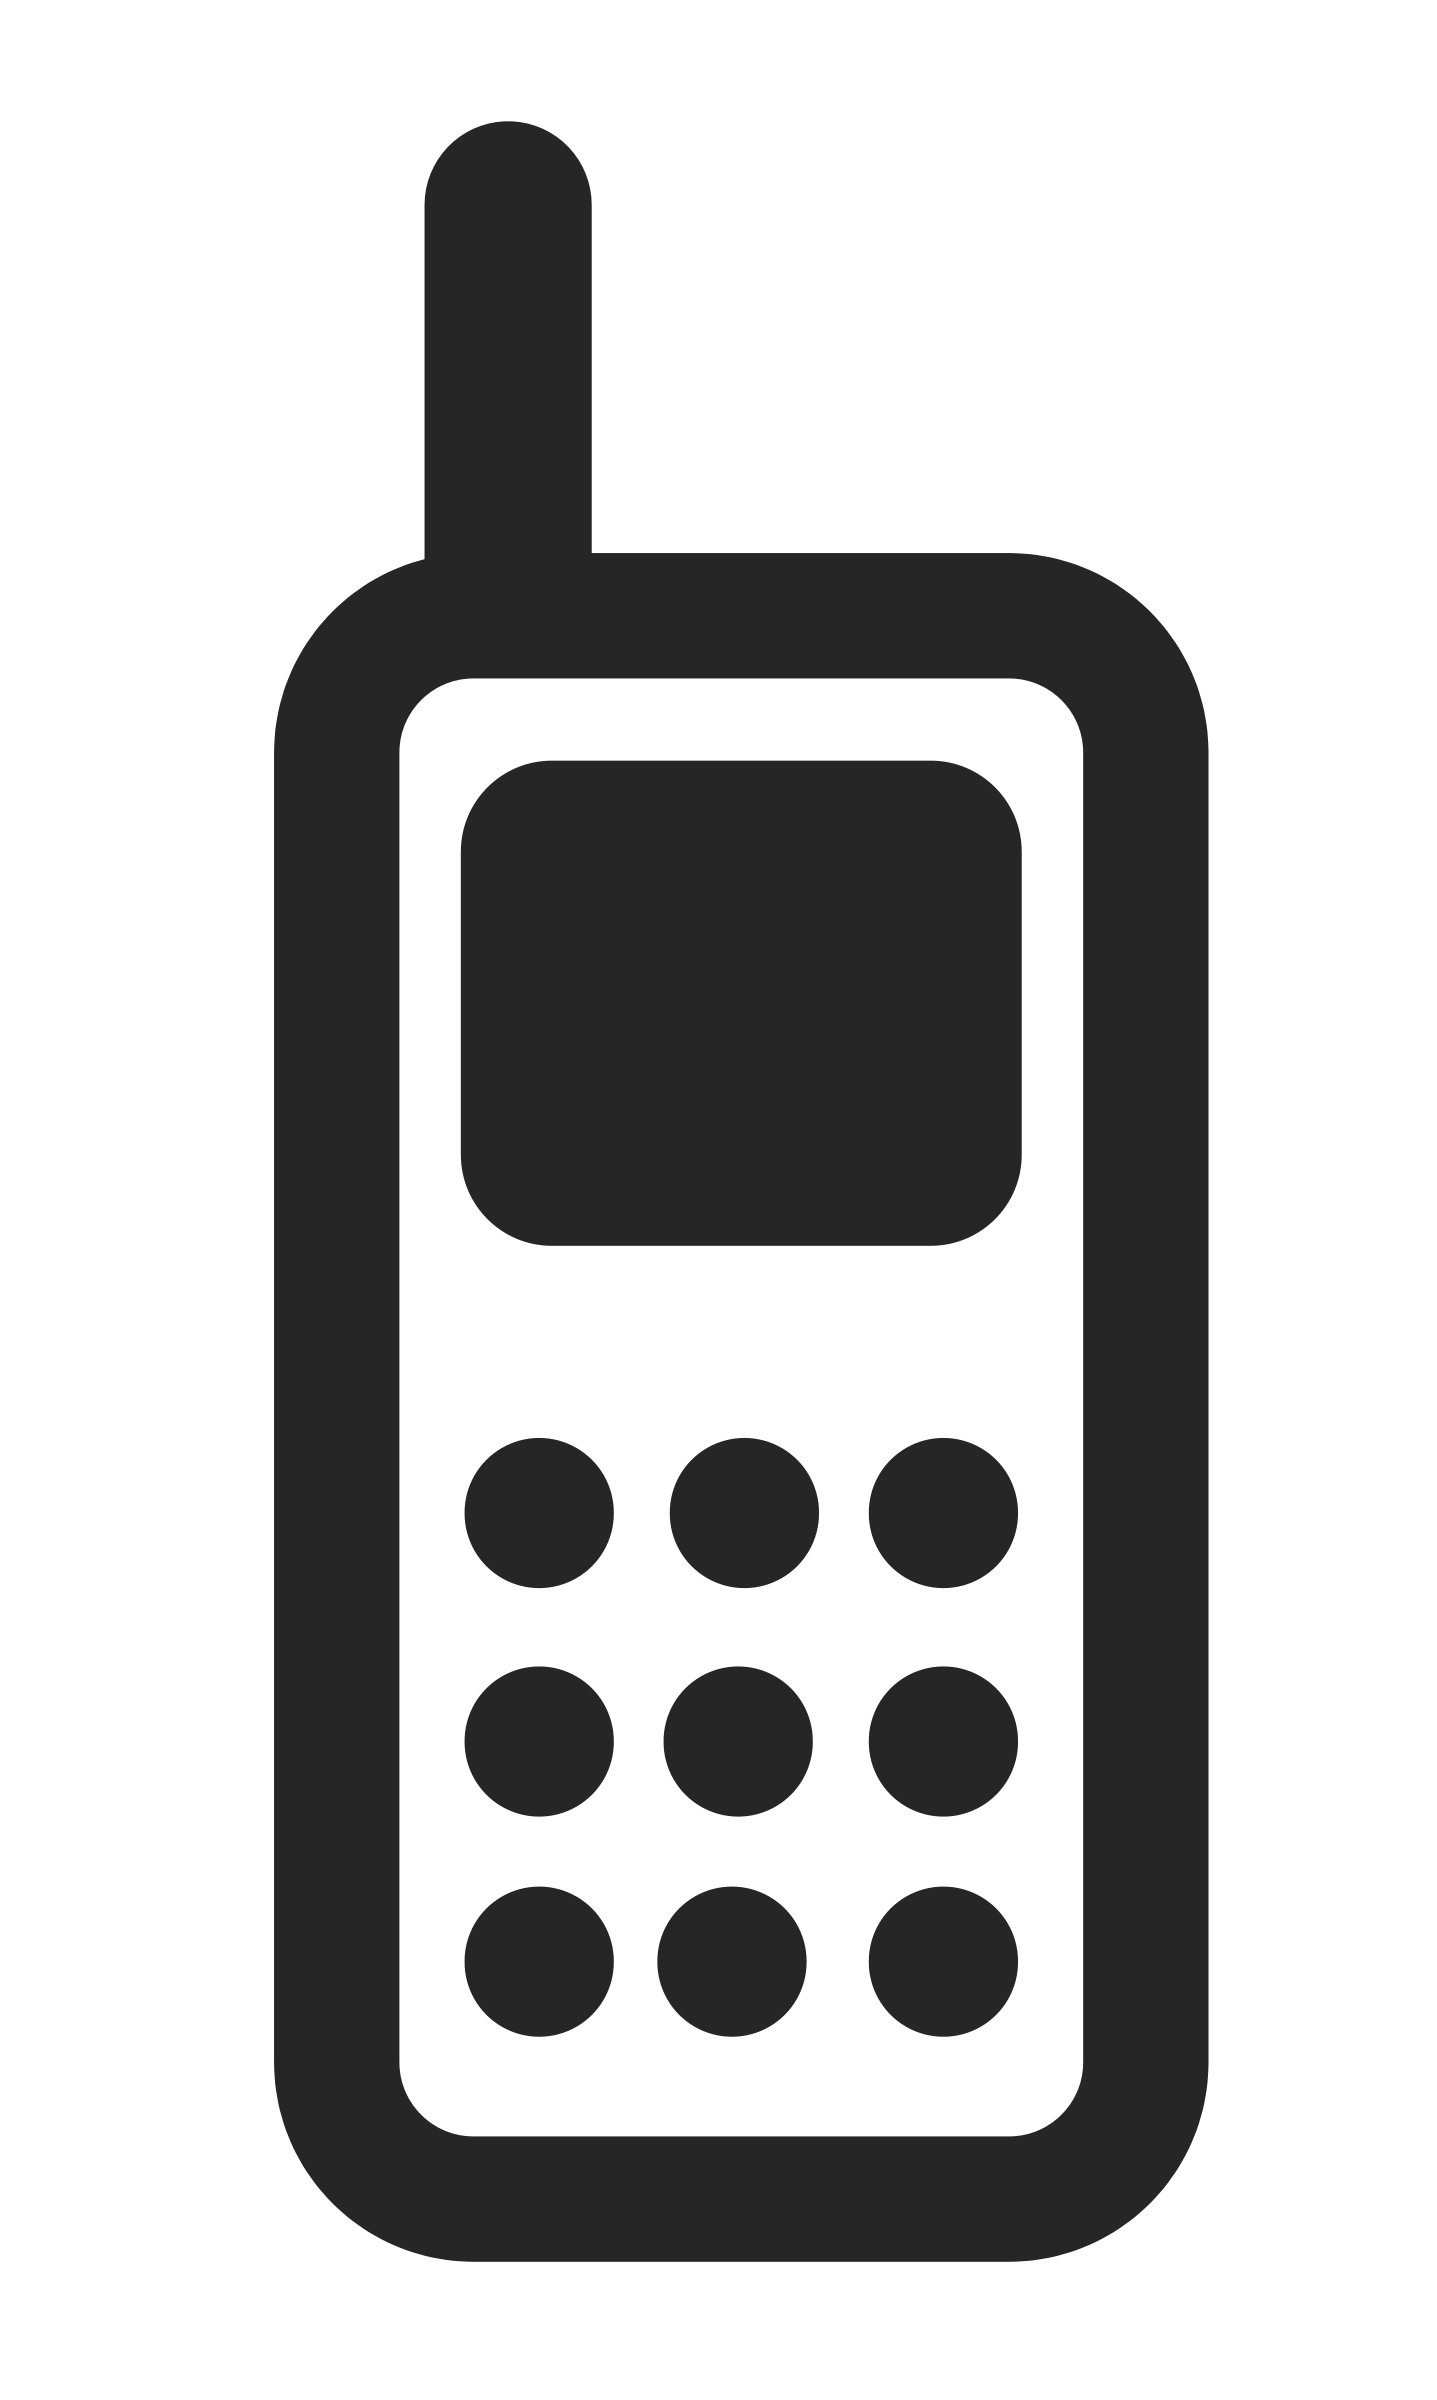 mobile device icon